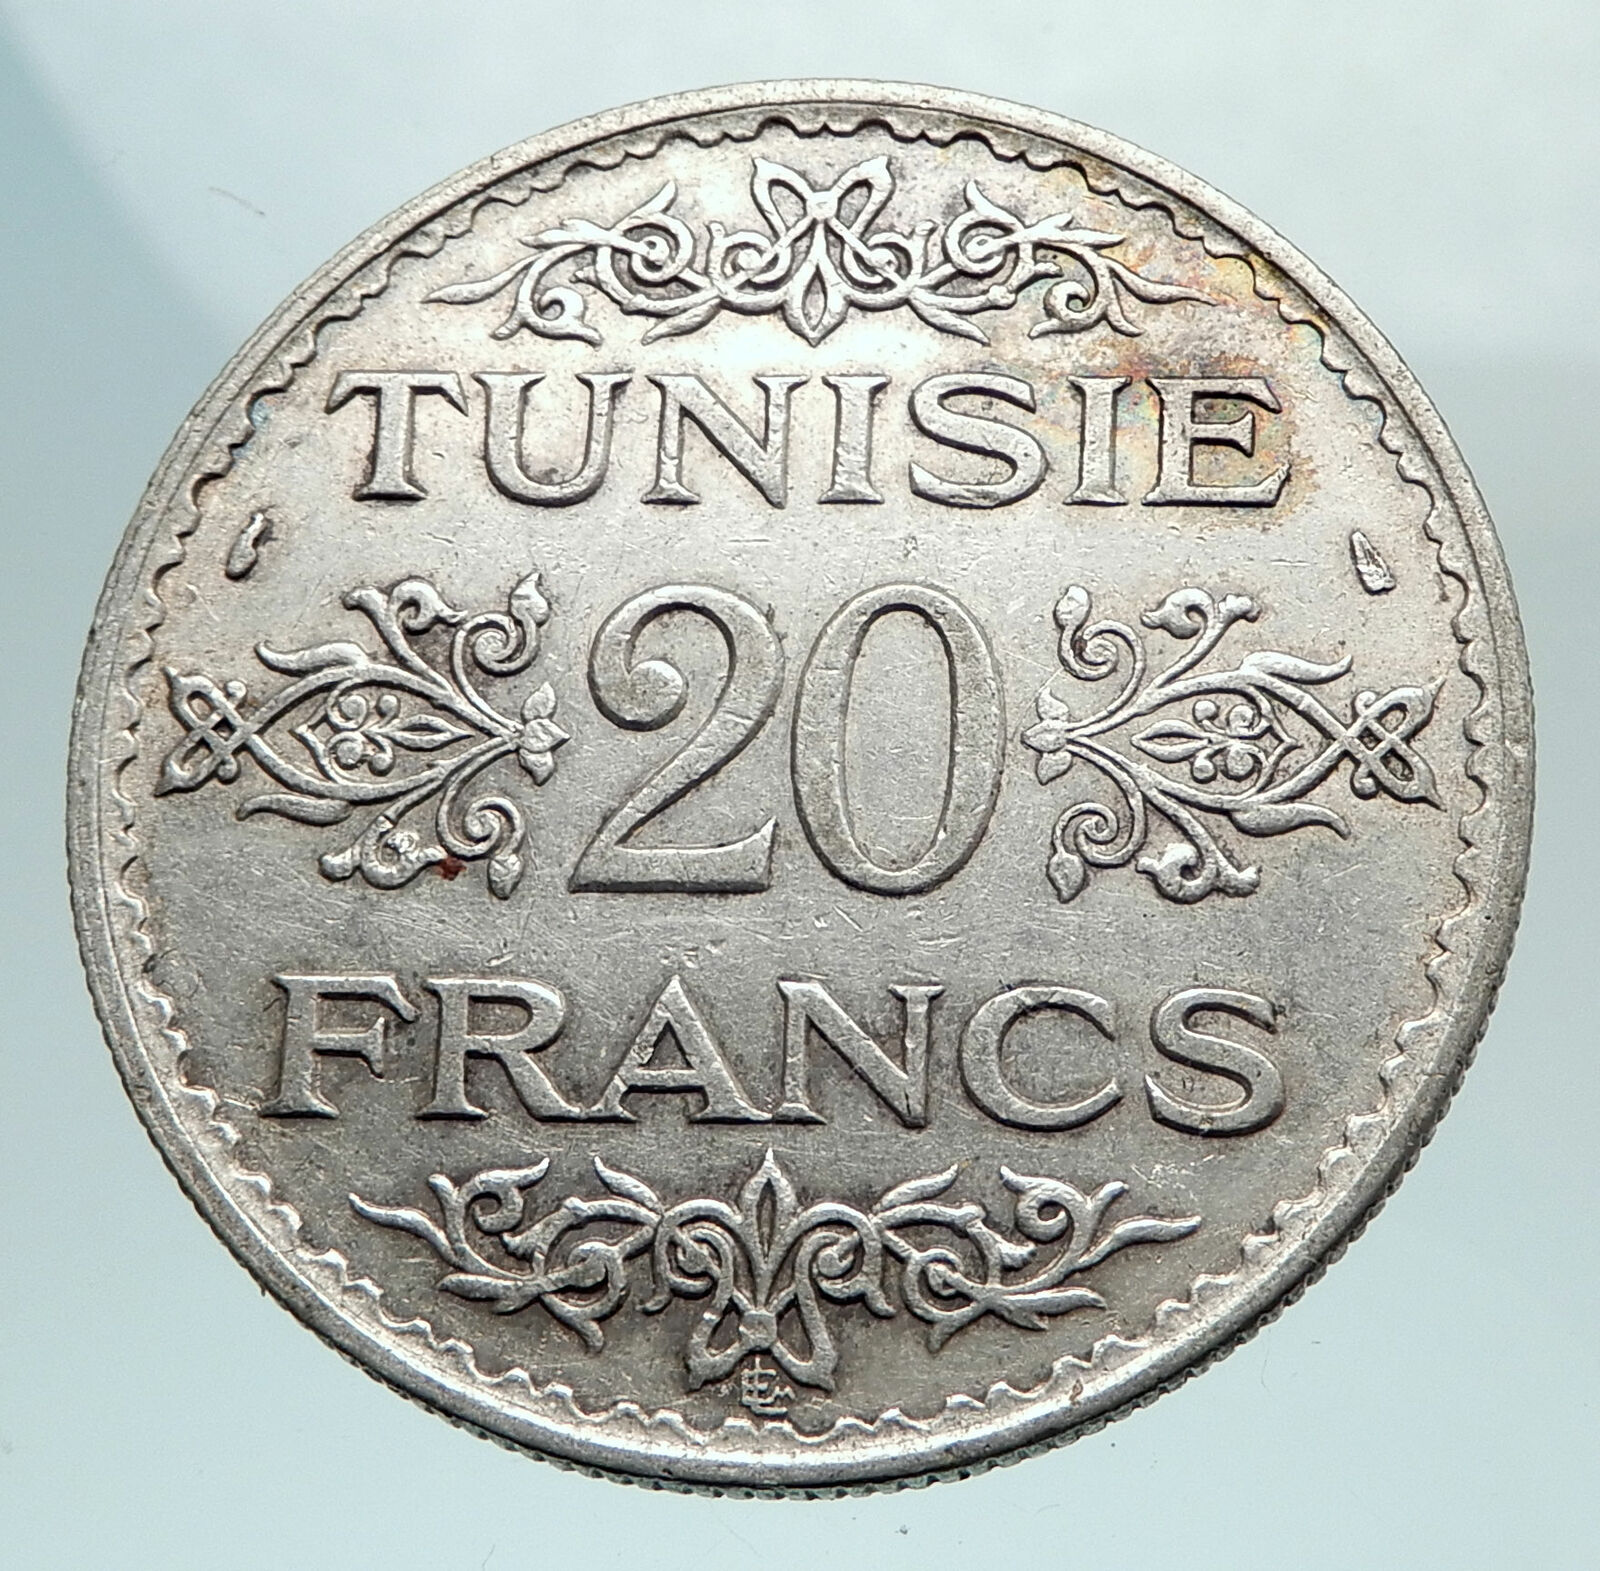 1934 TUNISIA Crown Prince Genuine Silver 20 Francs Tunisian Coin i80161